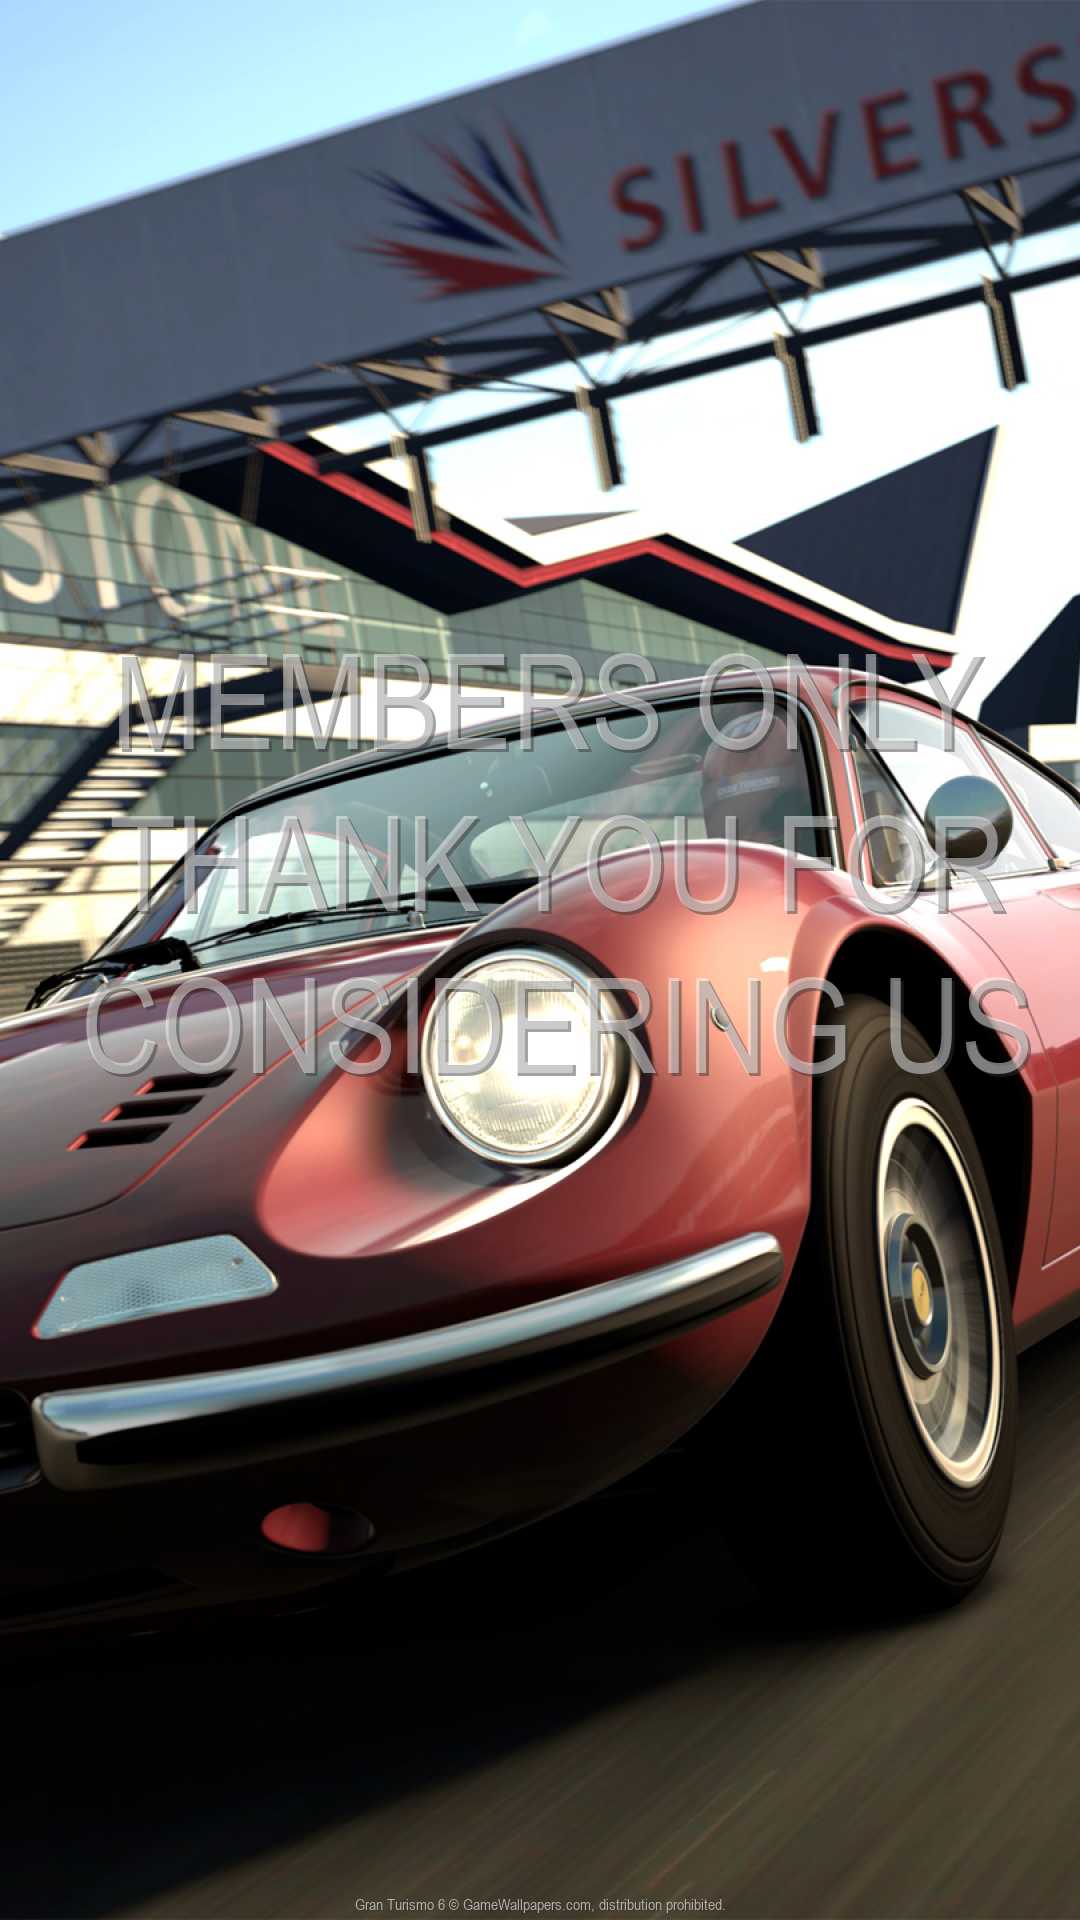 Gran Turismo 6 1080p Vertical Mobile wallpaper or background 02